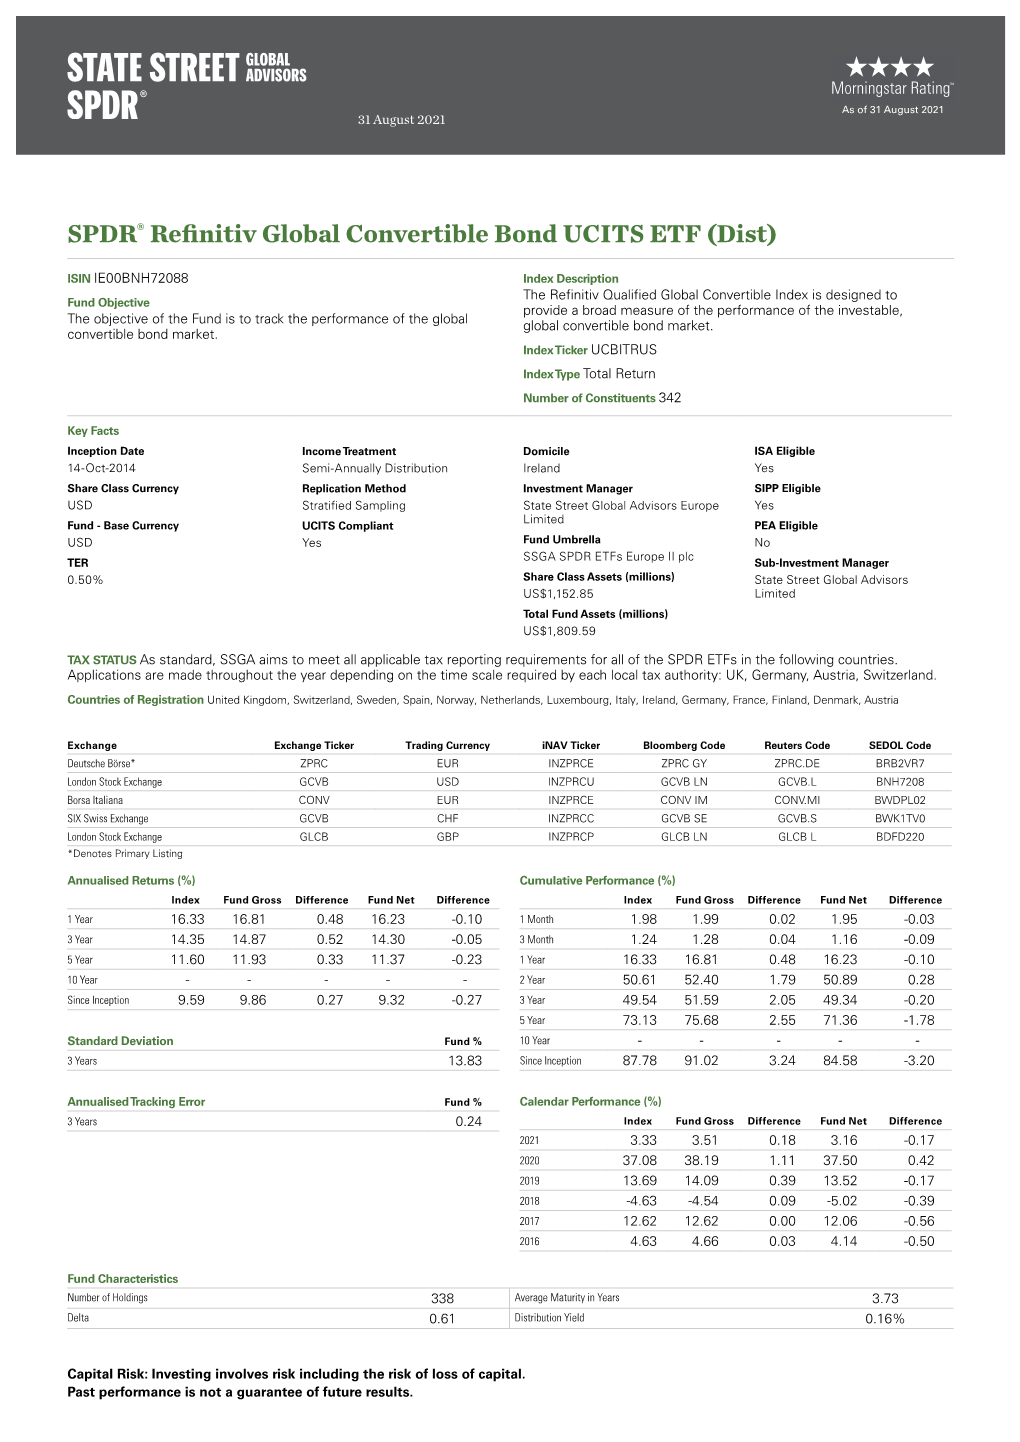 Fact Sheet:SPDR® Refinitiv Global Convertible Bond UCITS ETF, Aug2021